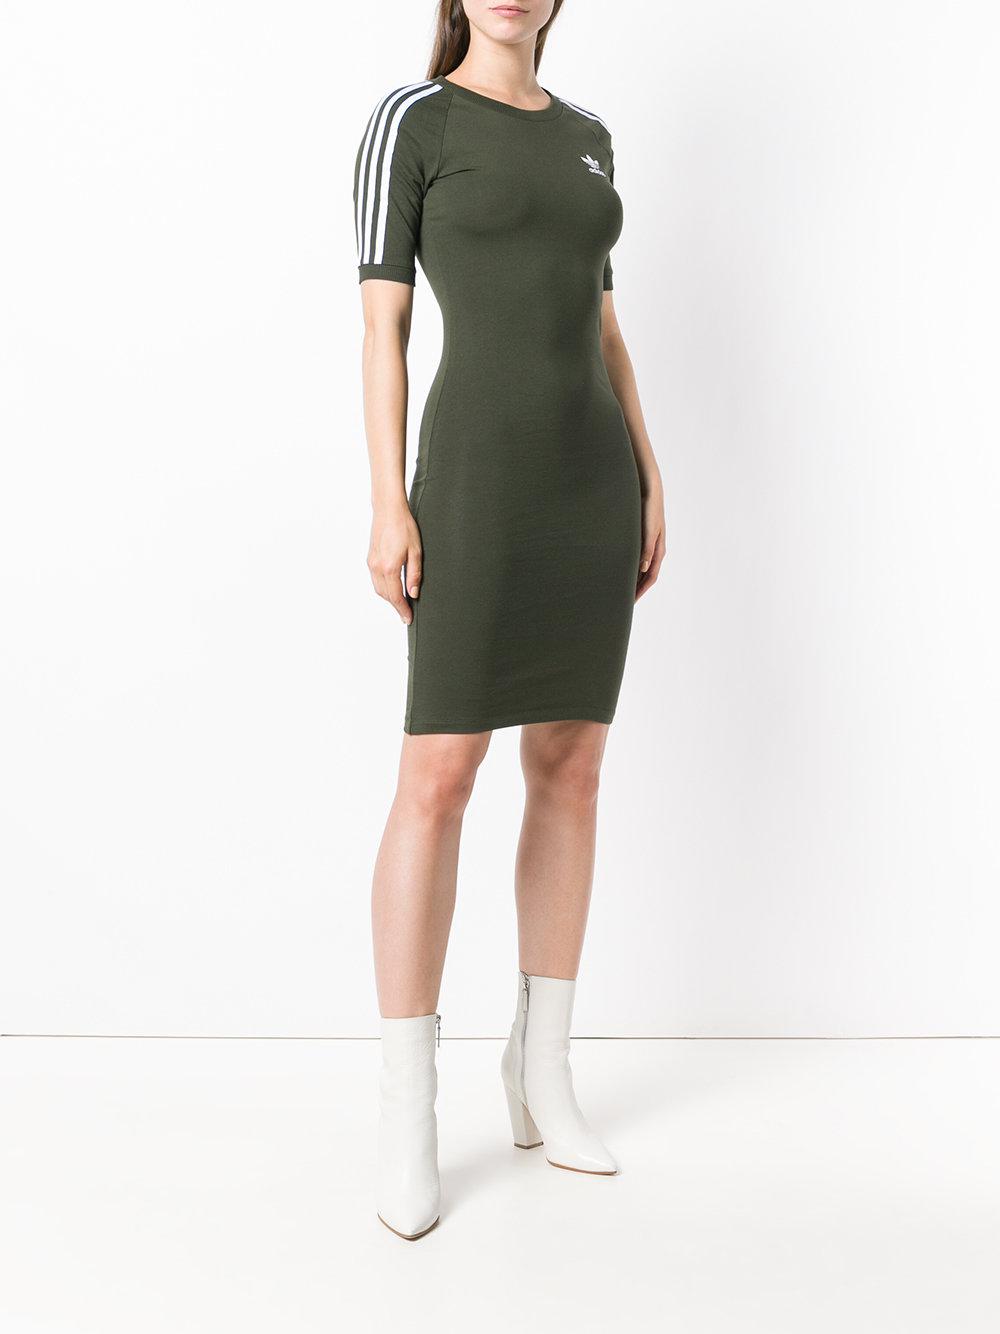 adidas Cotton Originals 3-stripes Dress in Green | Lyst Australia